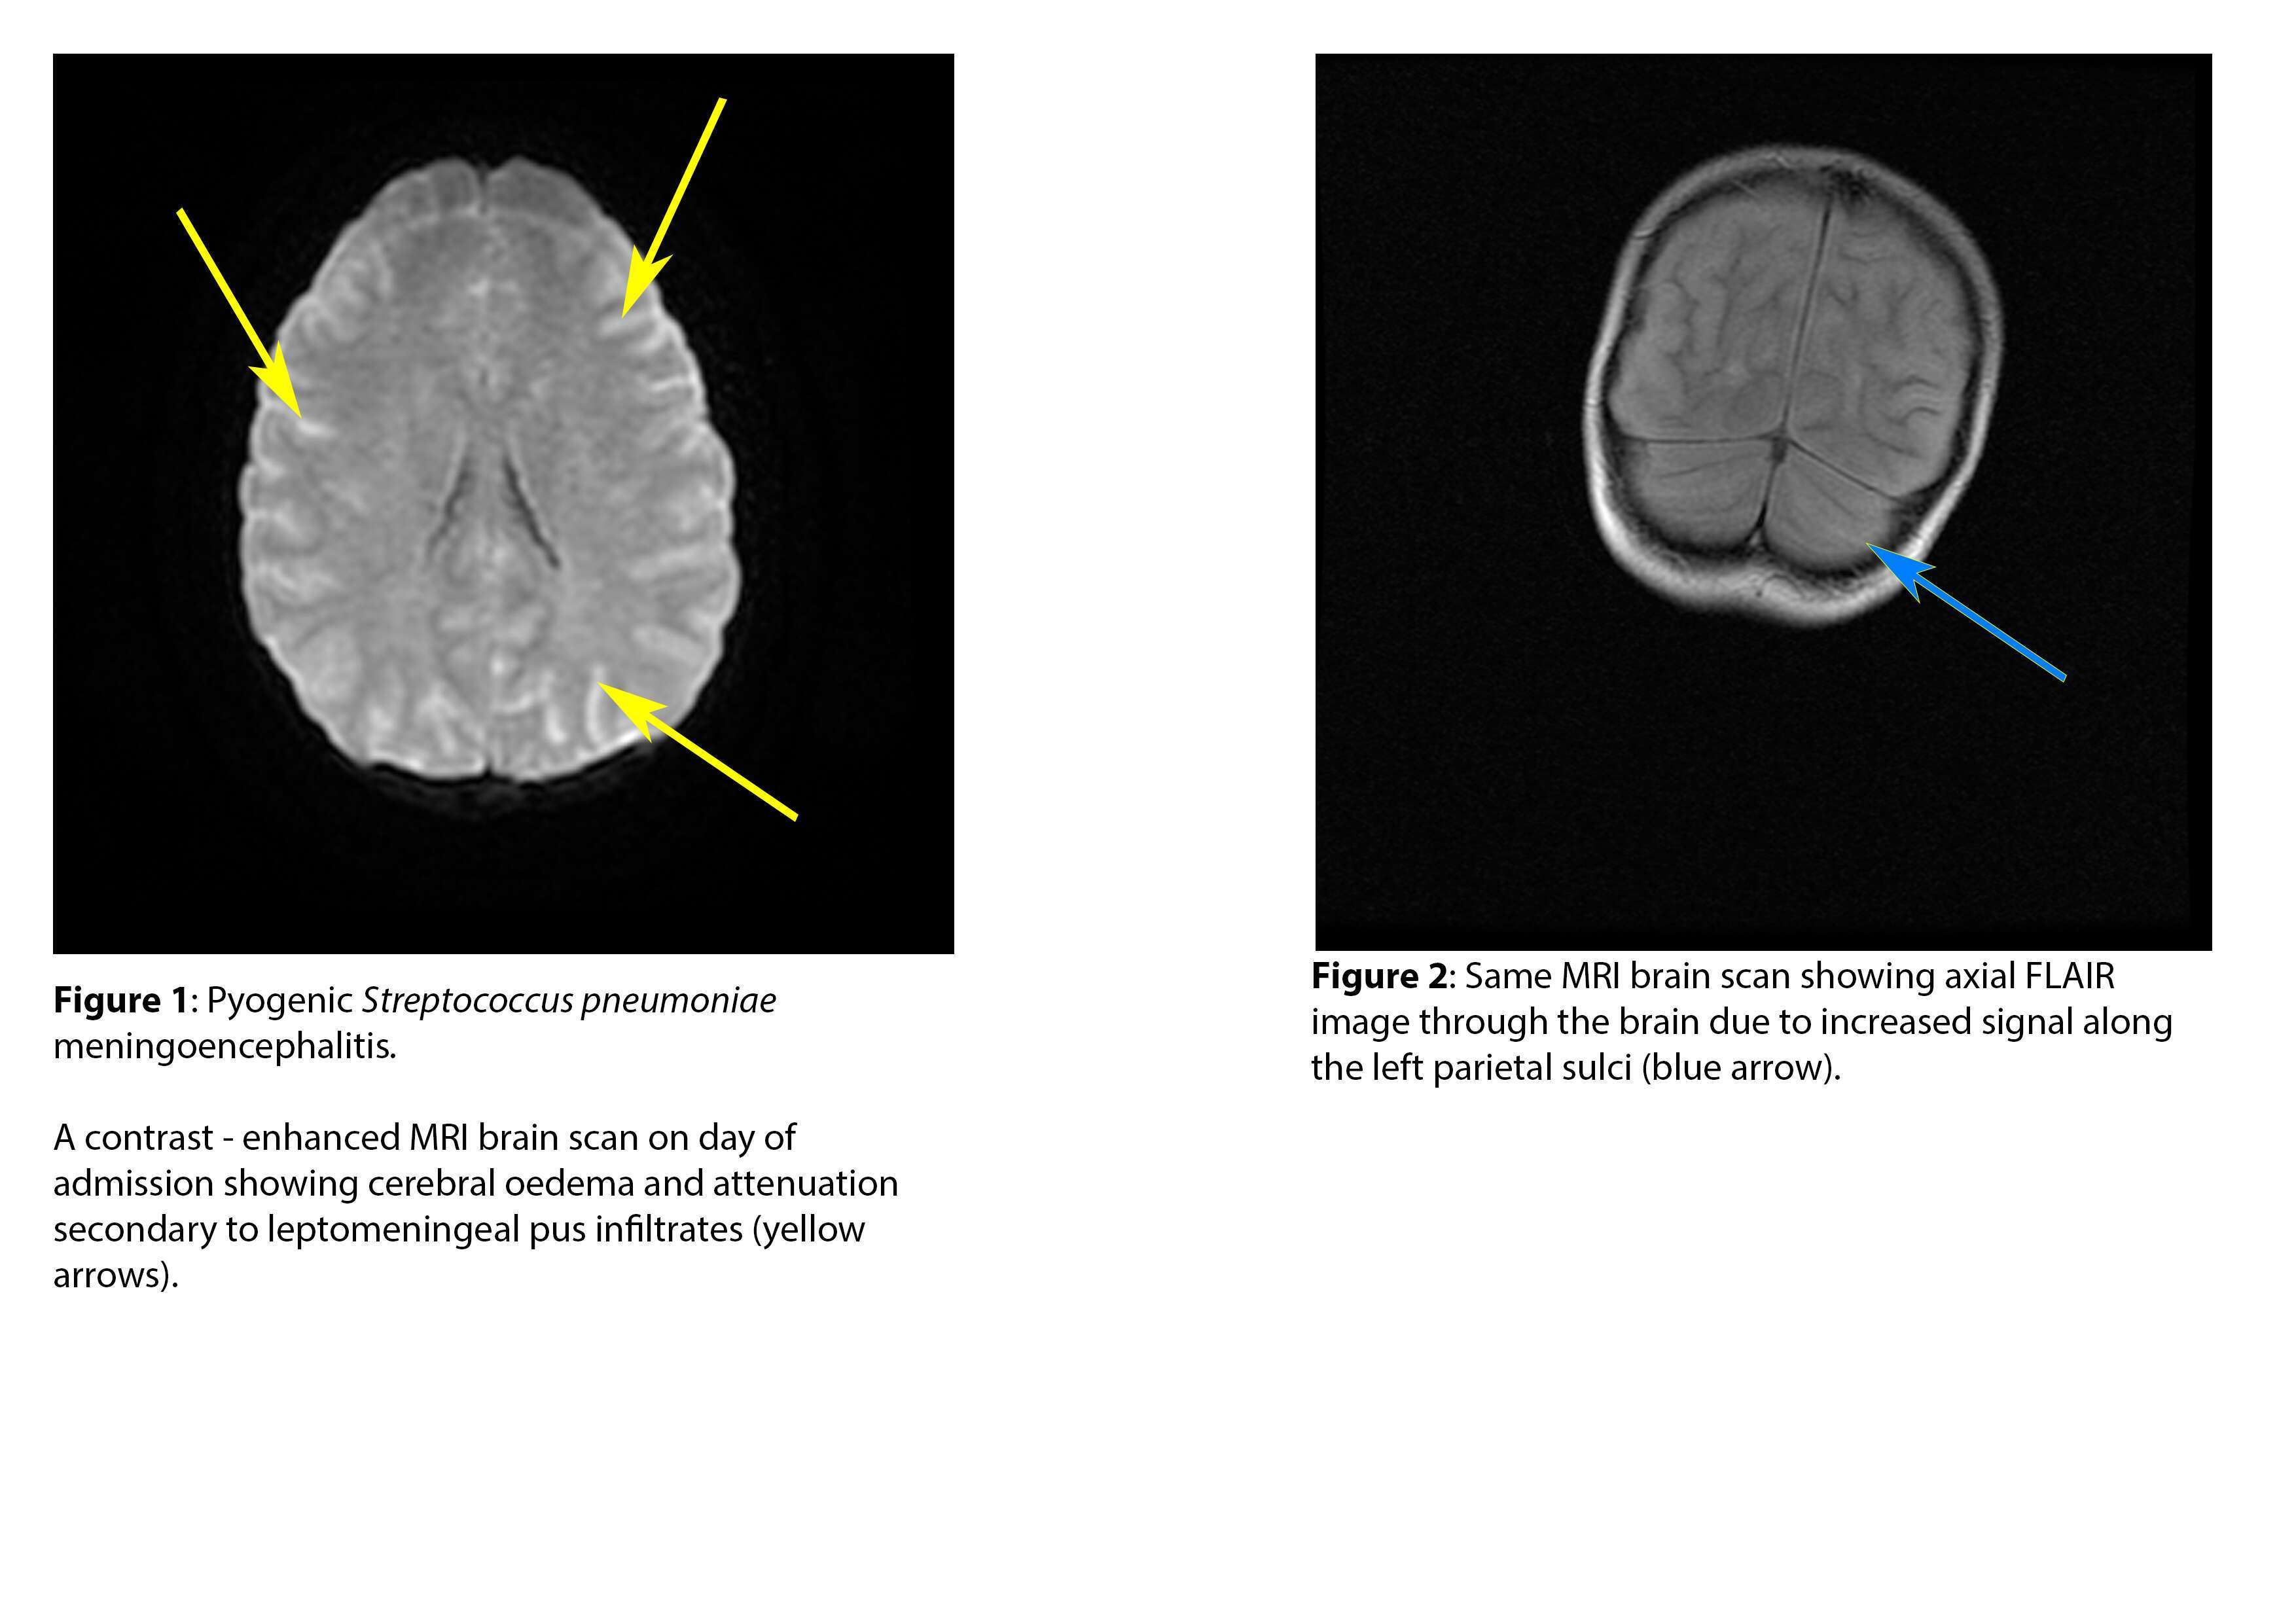 MRI Brain scans showing pyogenic meningoencephalitis